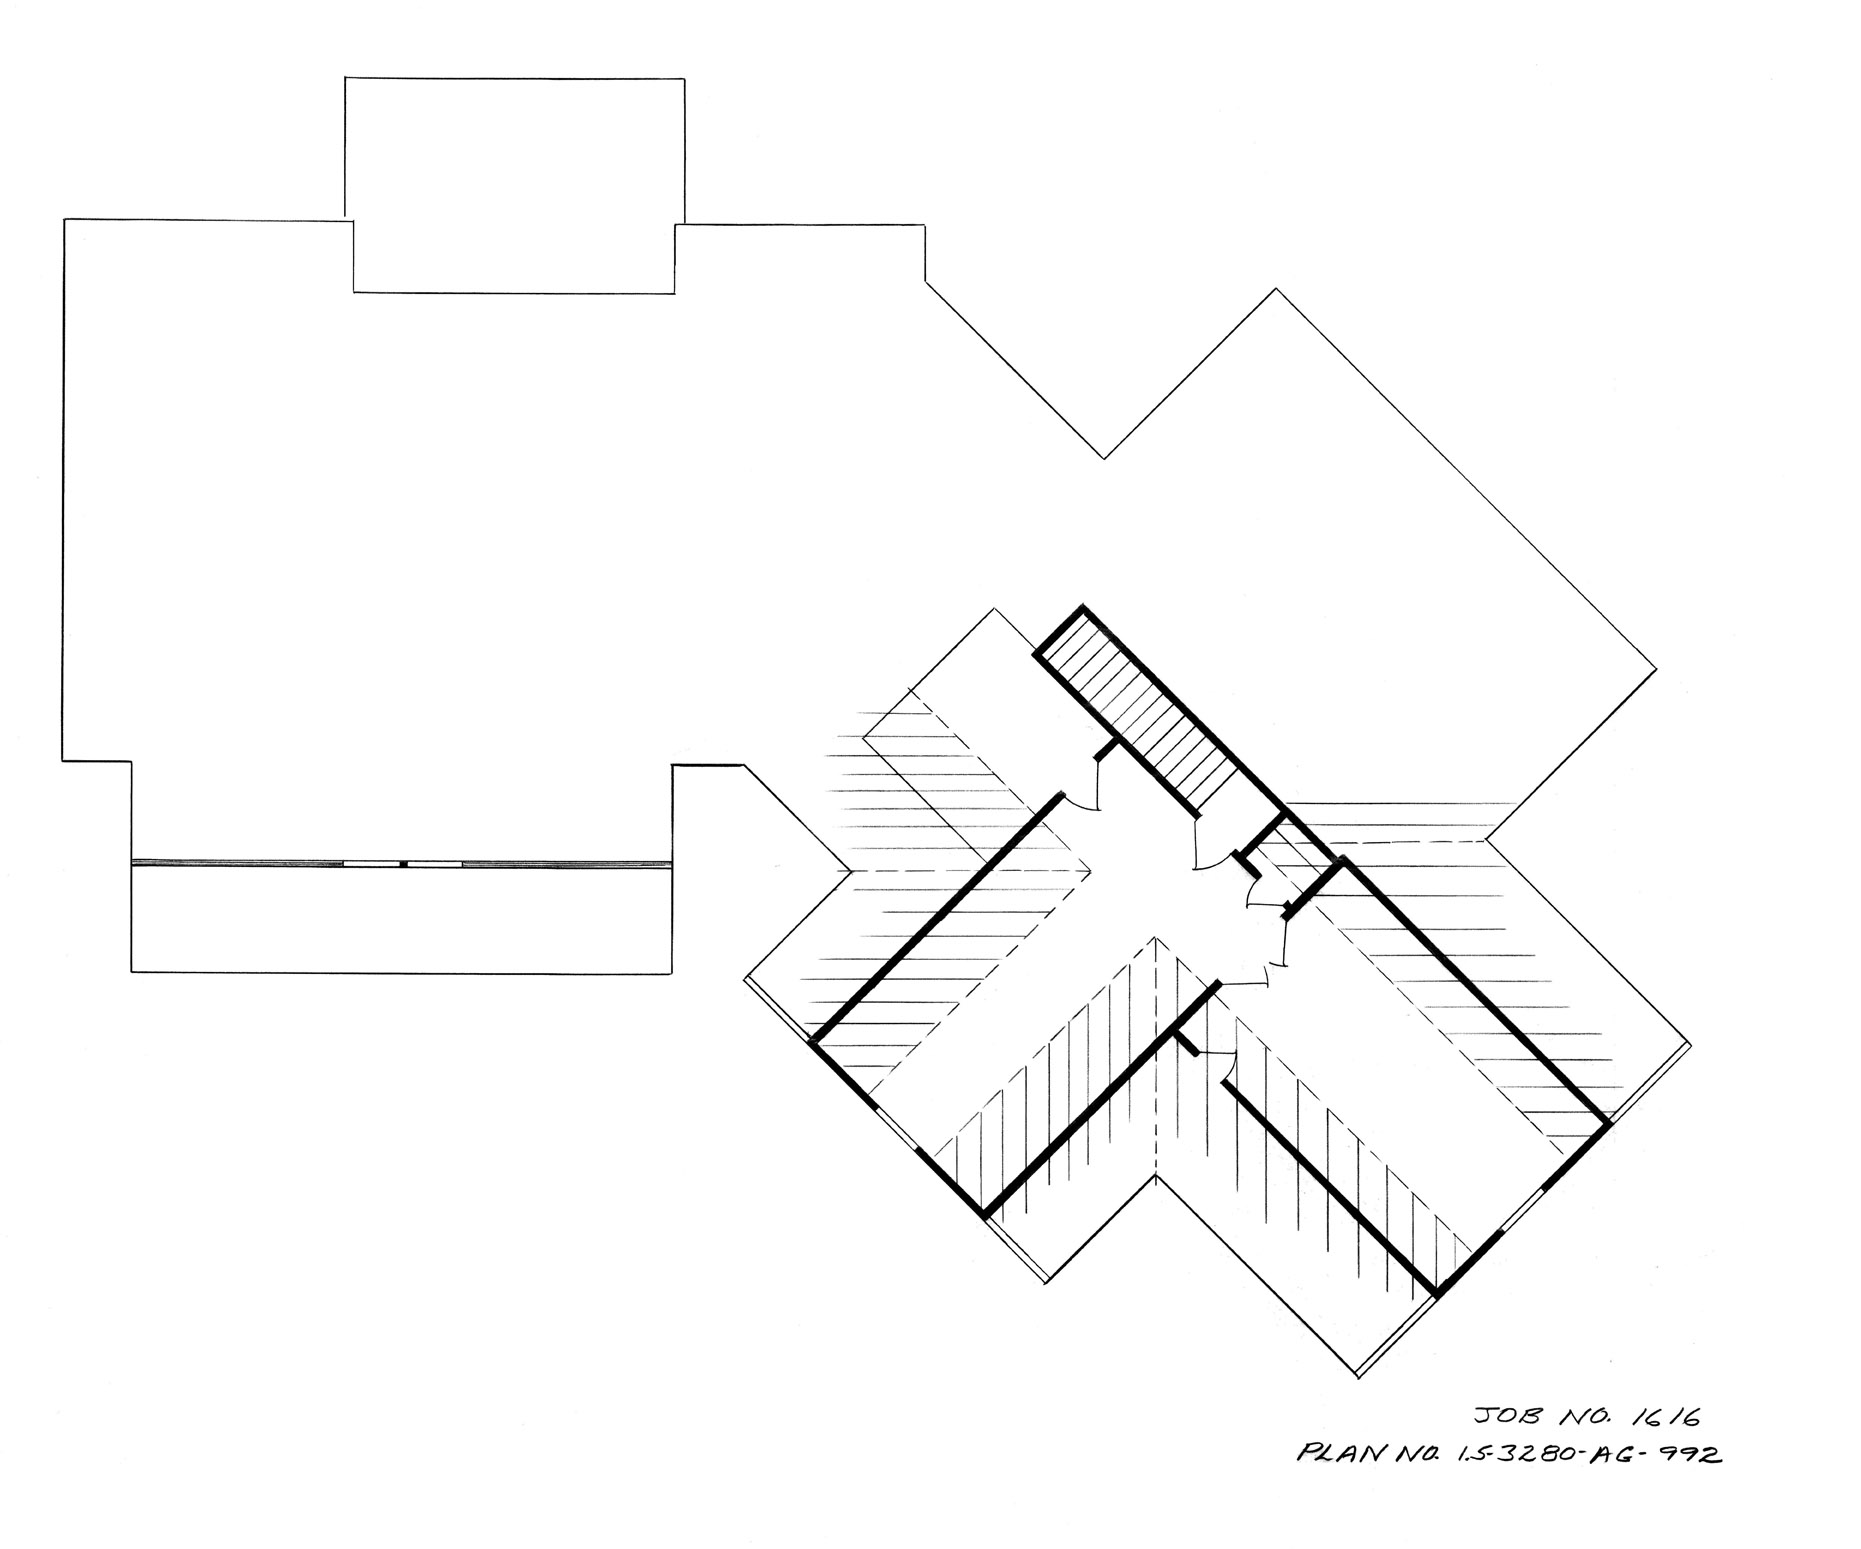 floor-plan-1616-2.jpg